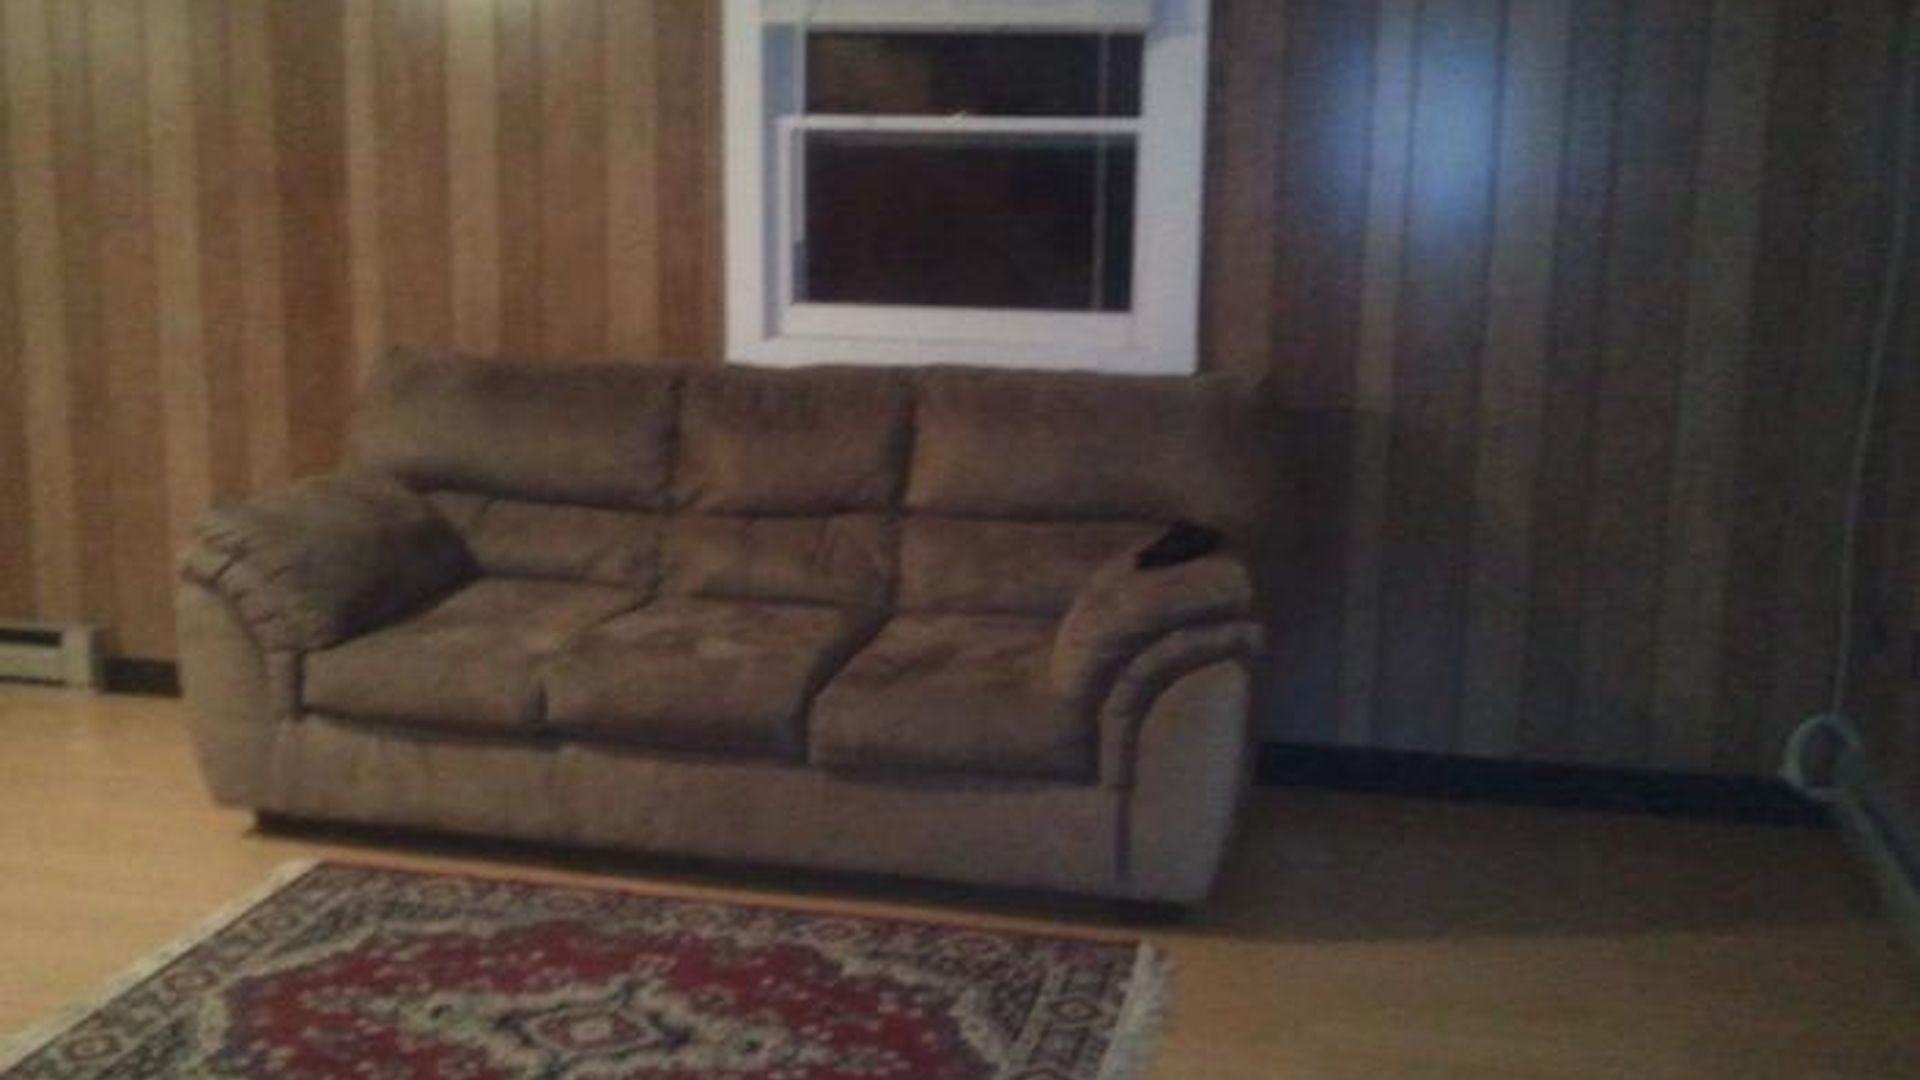 Furniture For Sale On Craigslist For Fulton Mo - Furniture ...